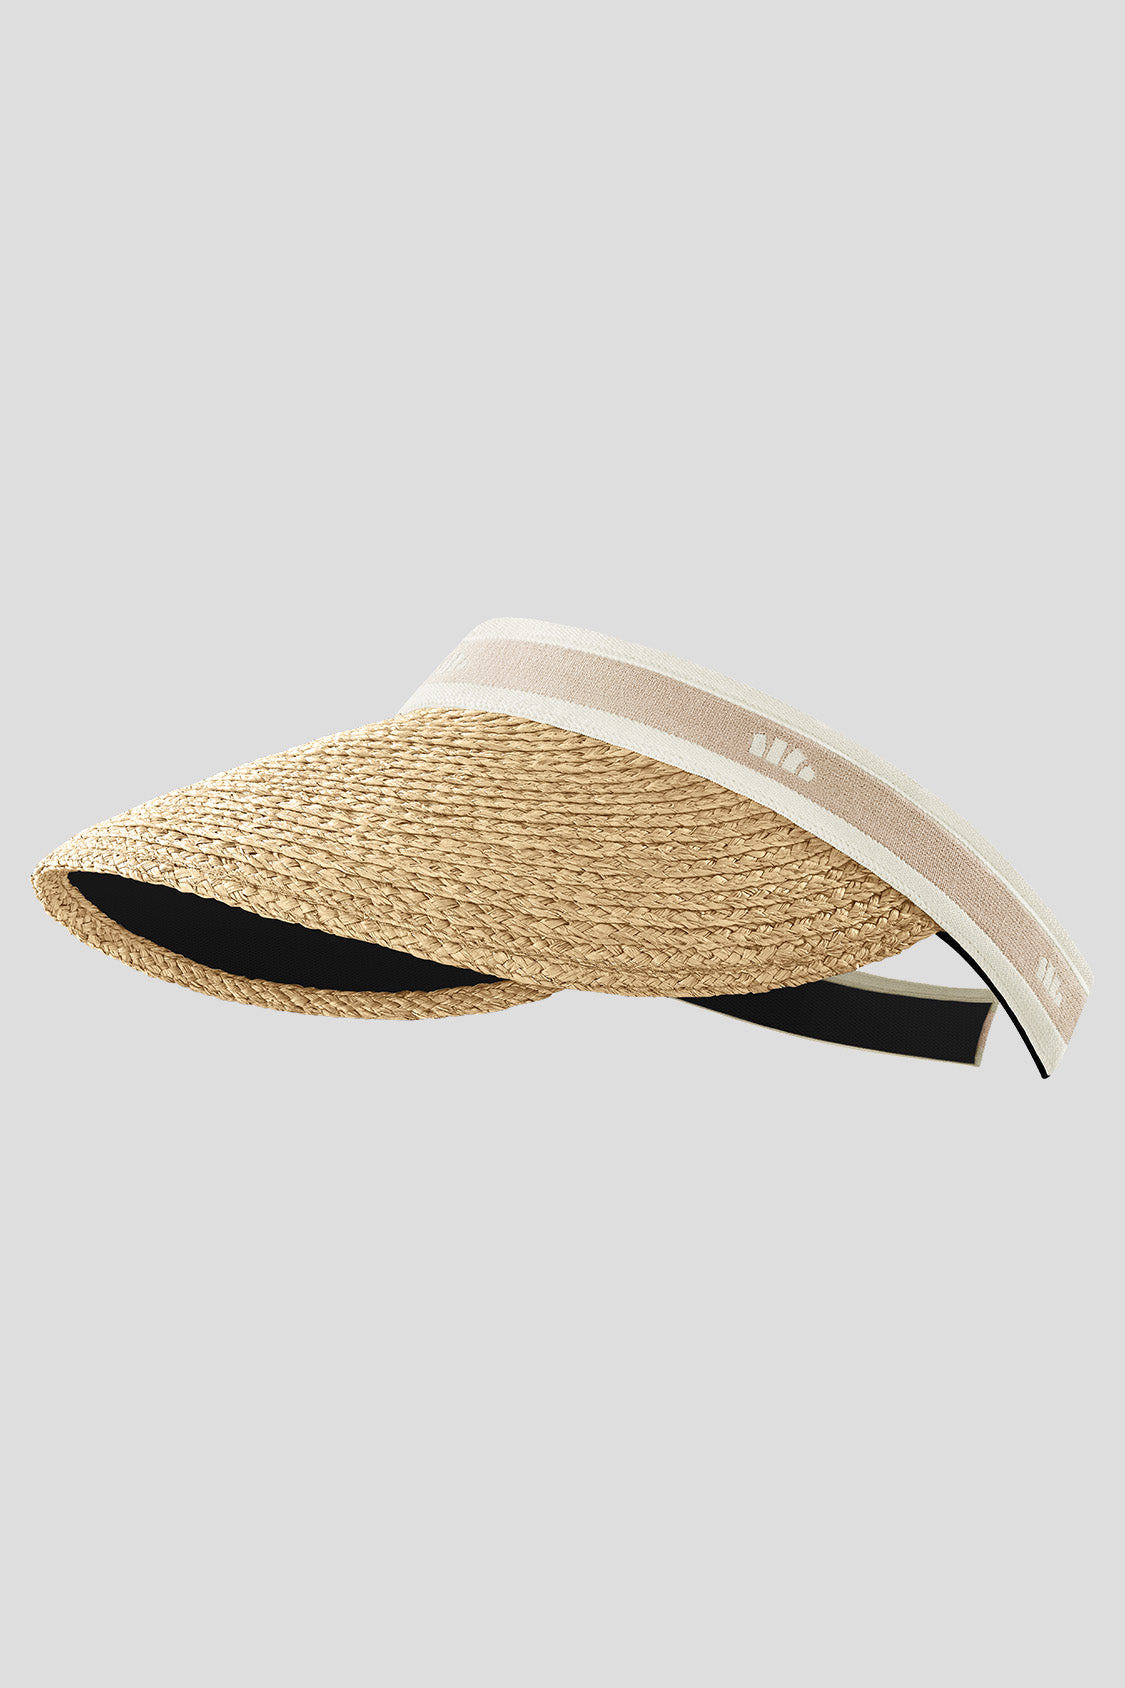 beneunder women's sun hats raffia upf50+ #color_light brown raffia